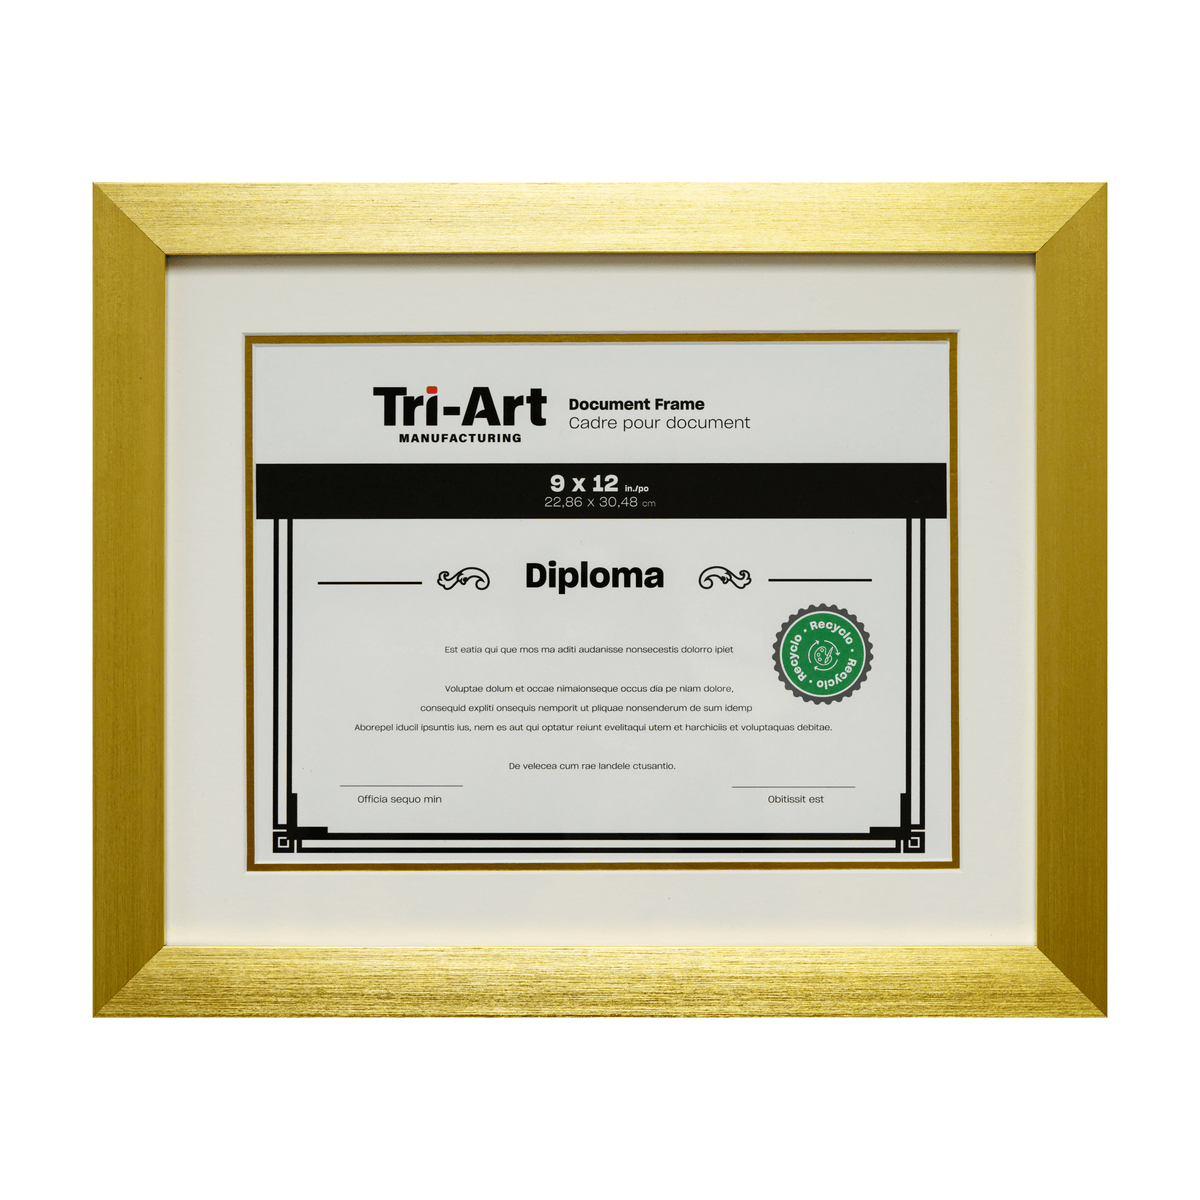 Diploma Frames - Tri-Art Mfg.